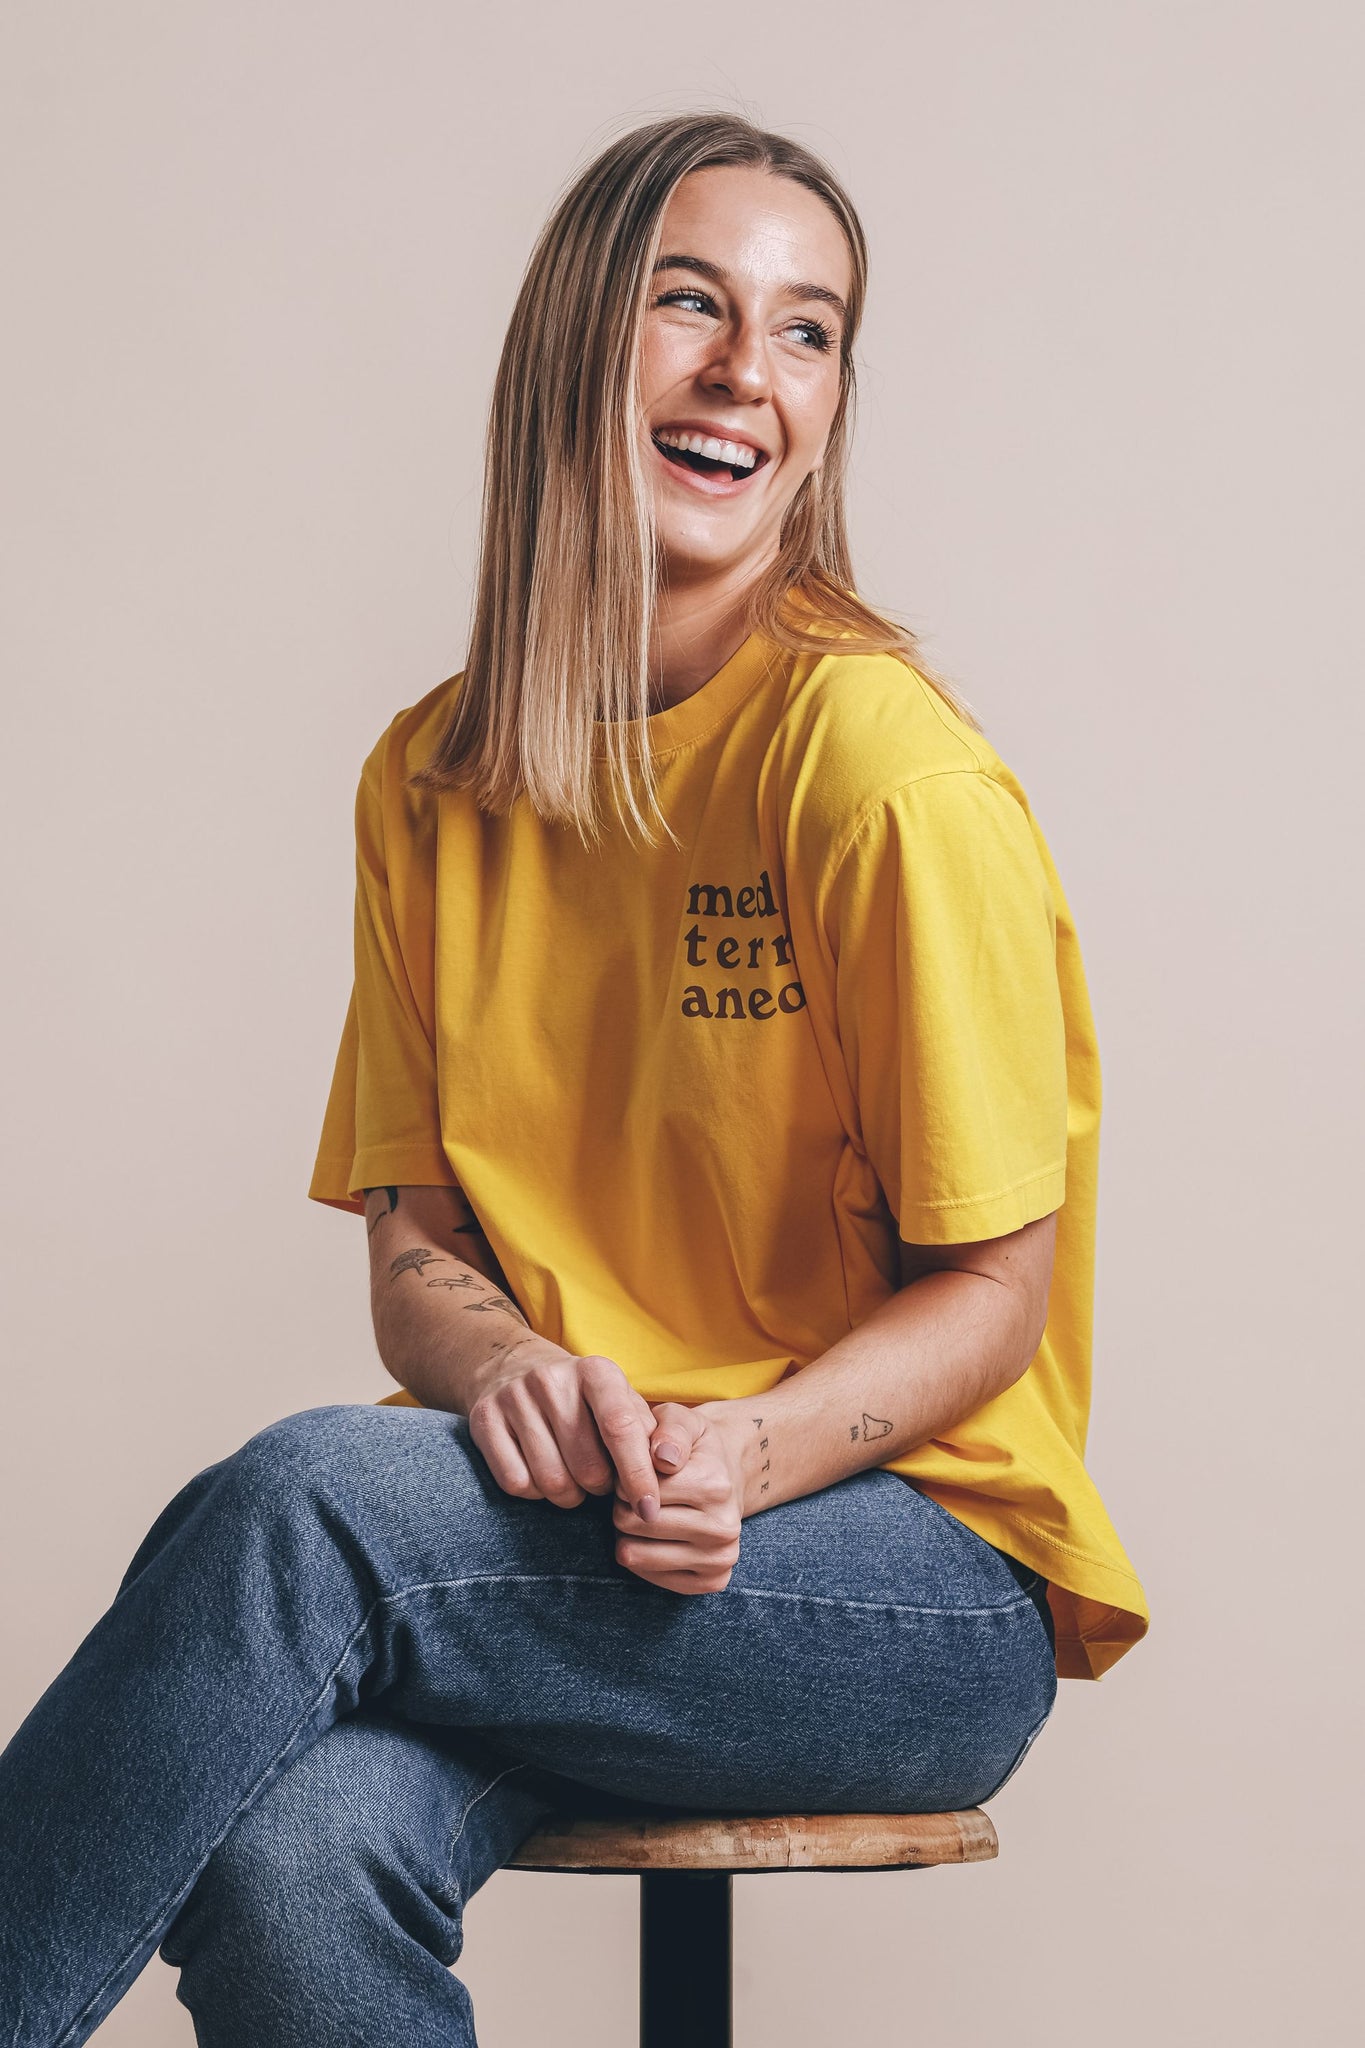 Women's Poniente T-Shirt Spectra Yellow